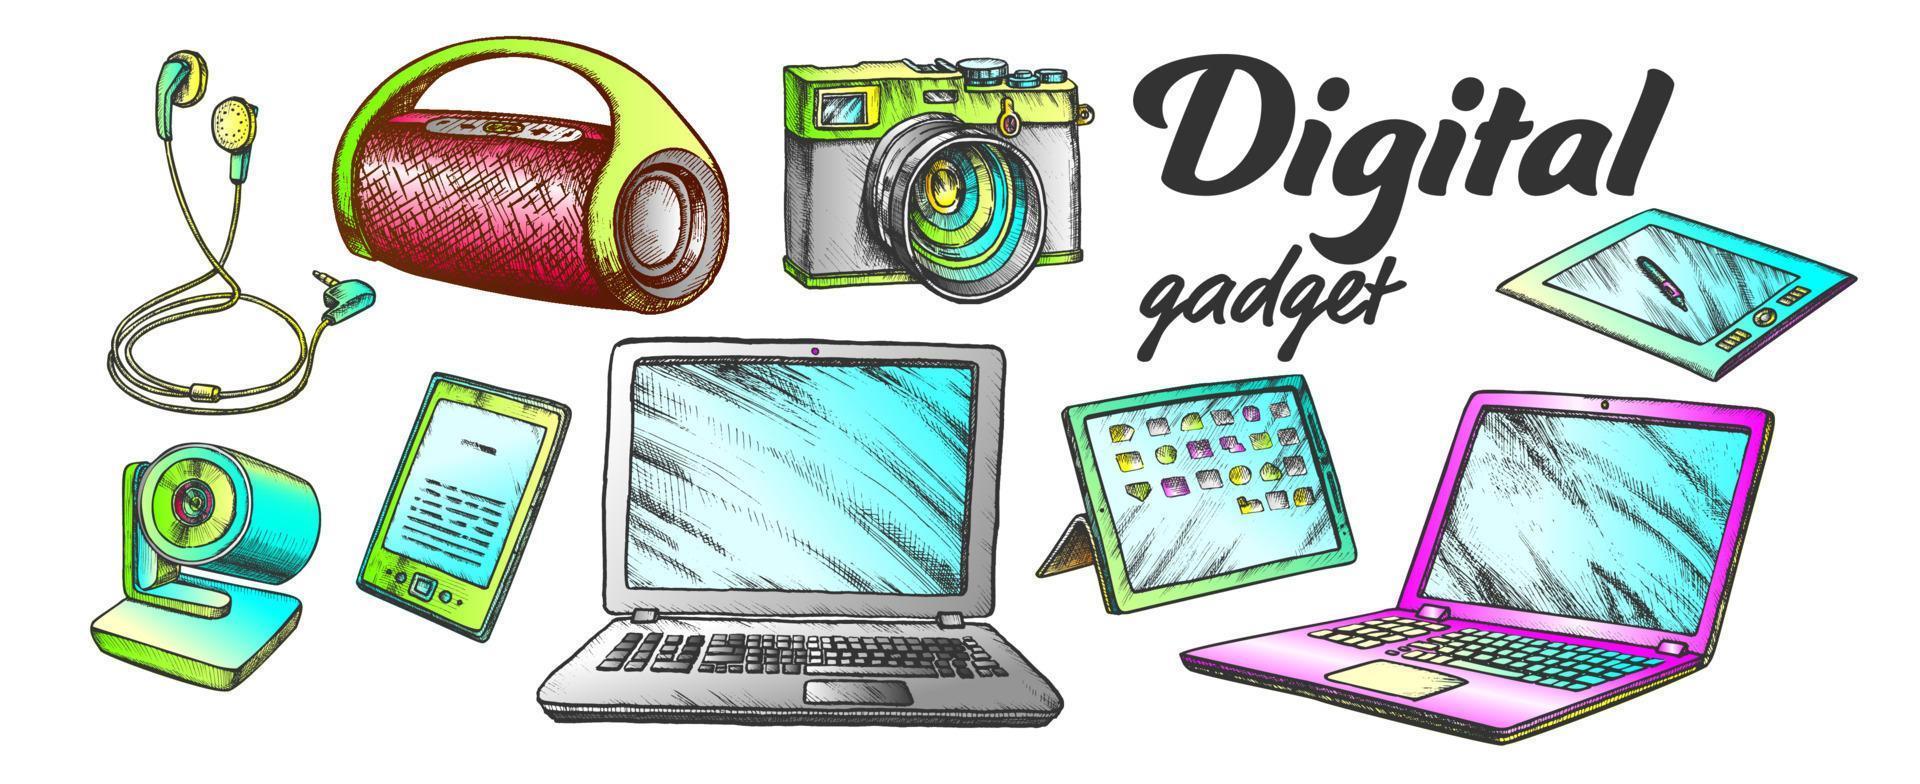 digitaal audio en video gadgets kleur reeks vector